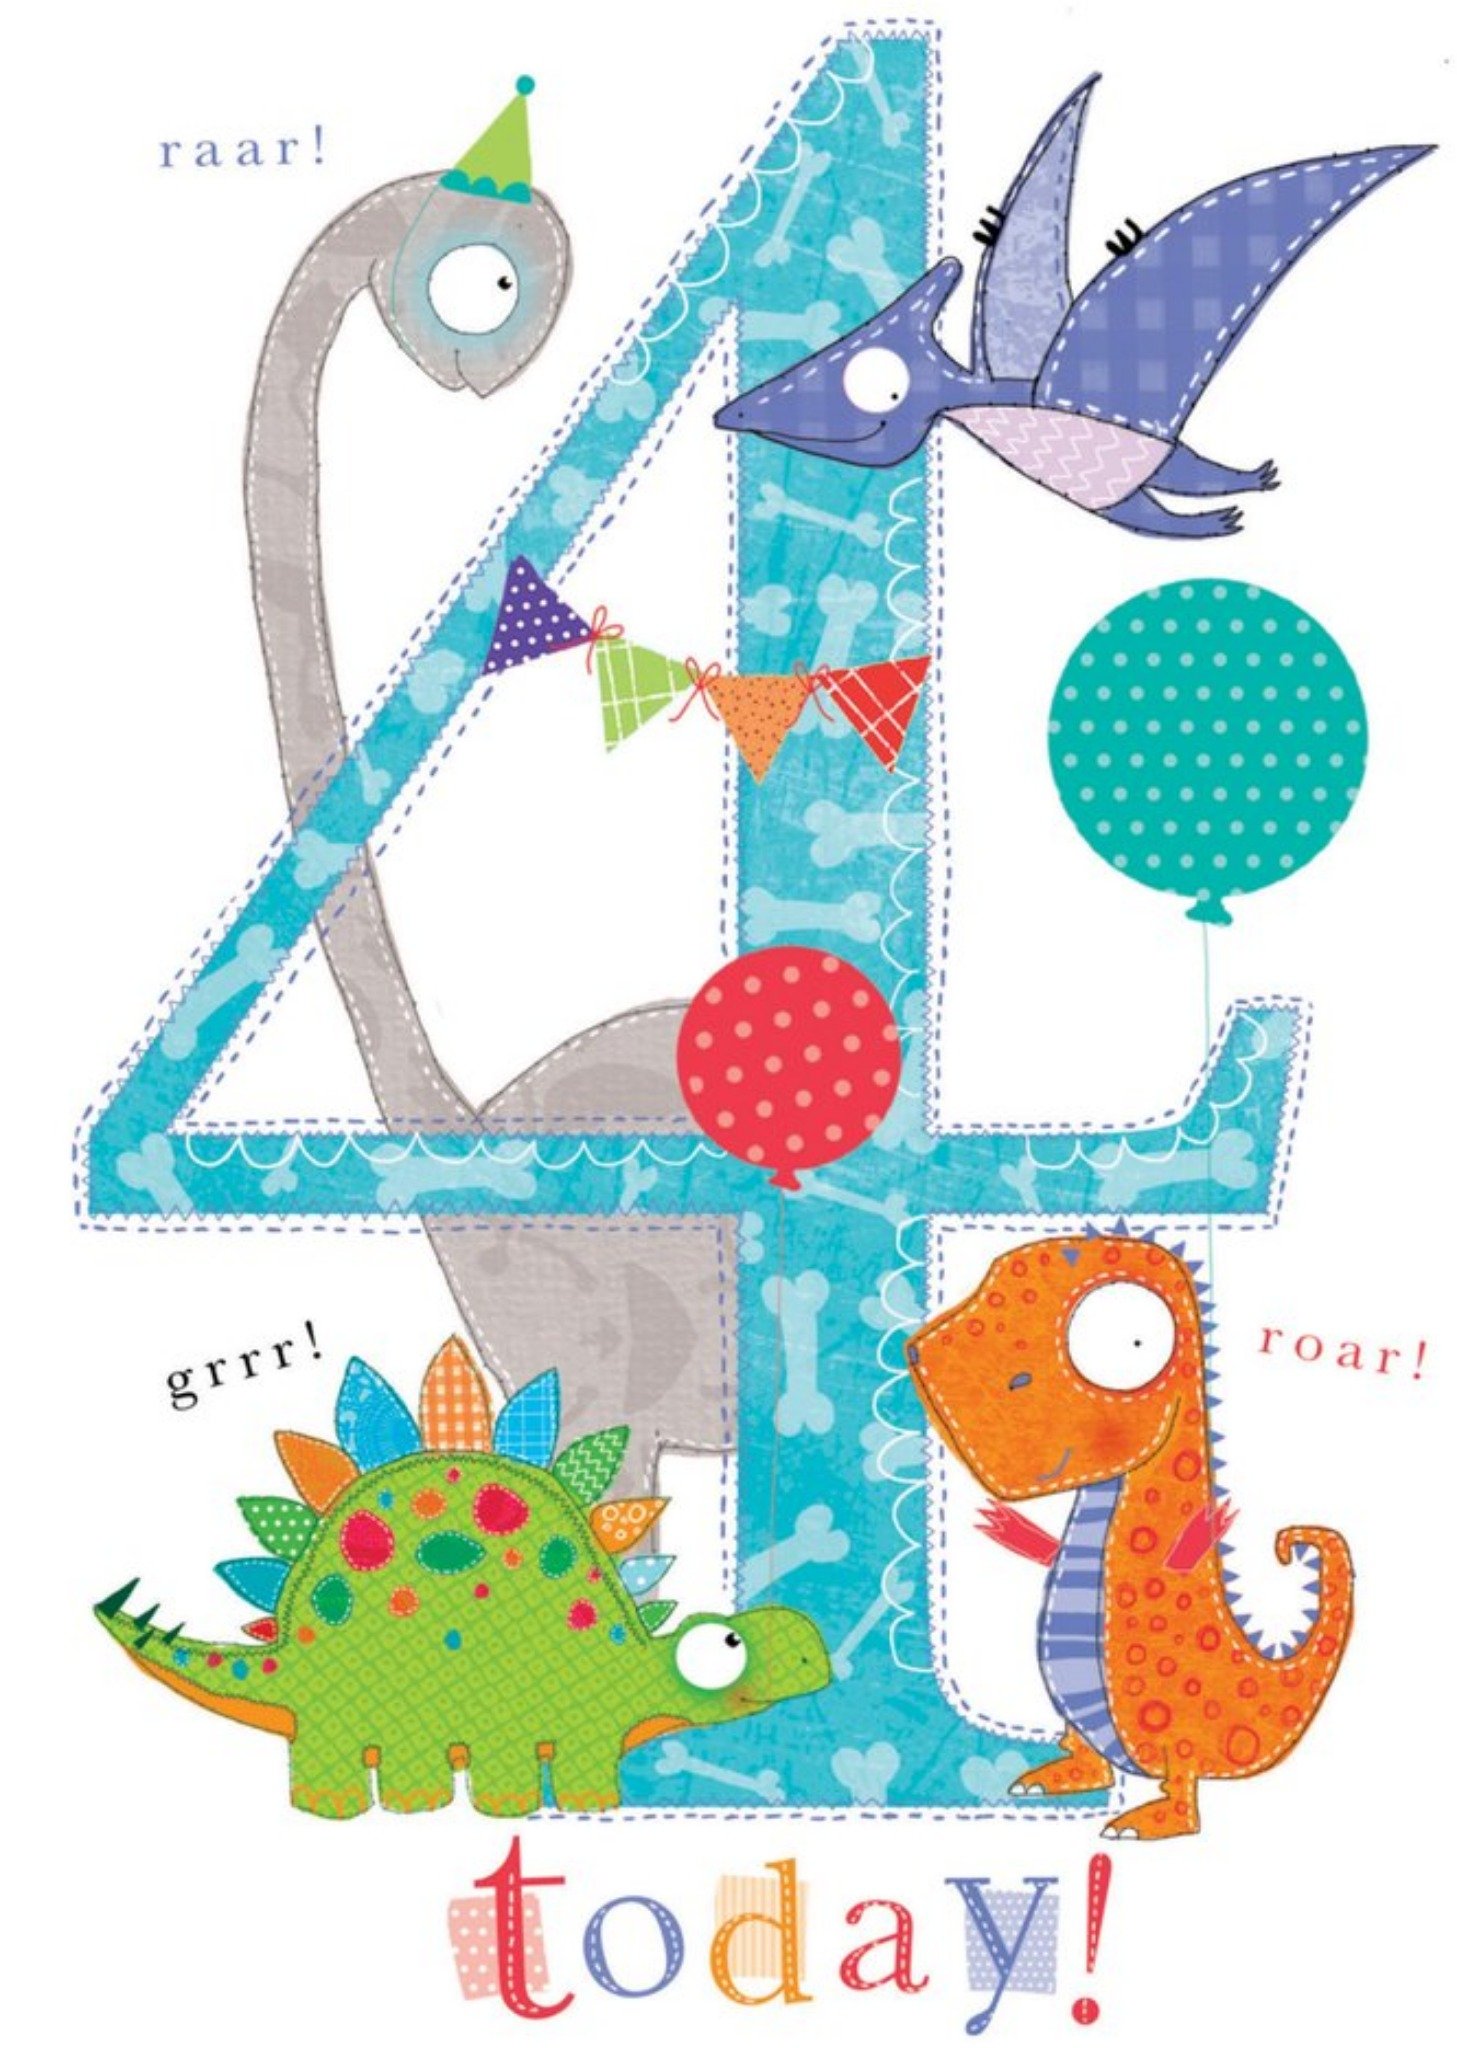 Moonpig 4 Today Cute Dinosaurs Birthday Card Ecard